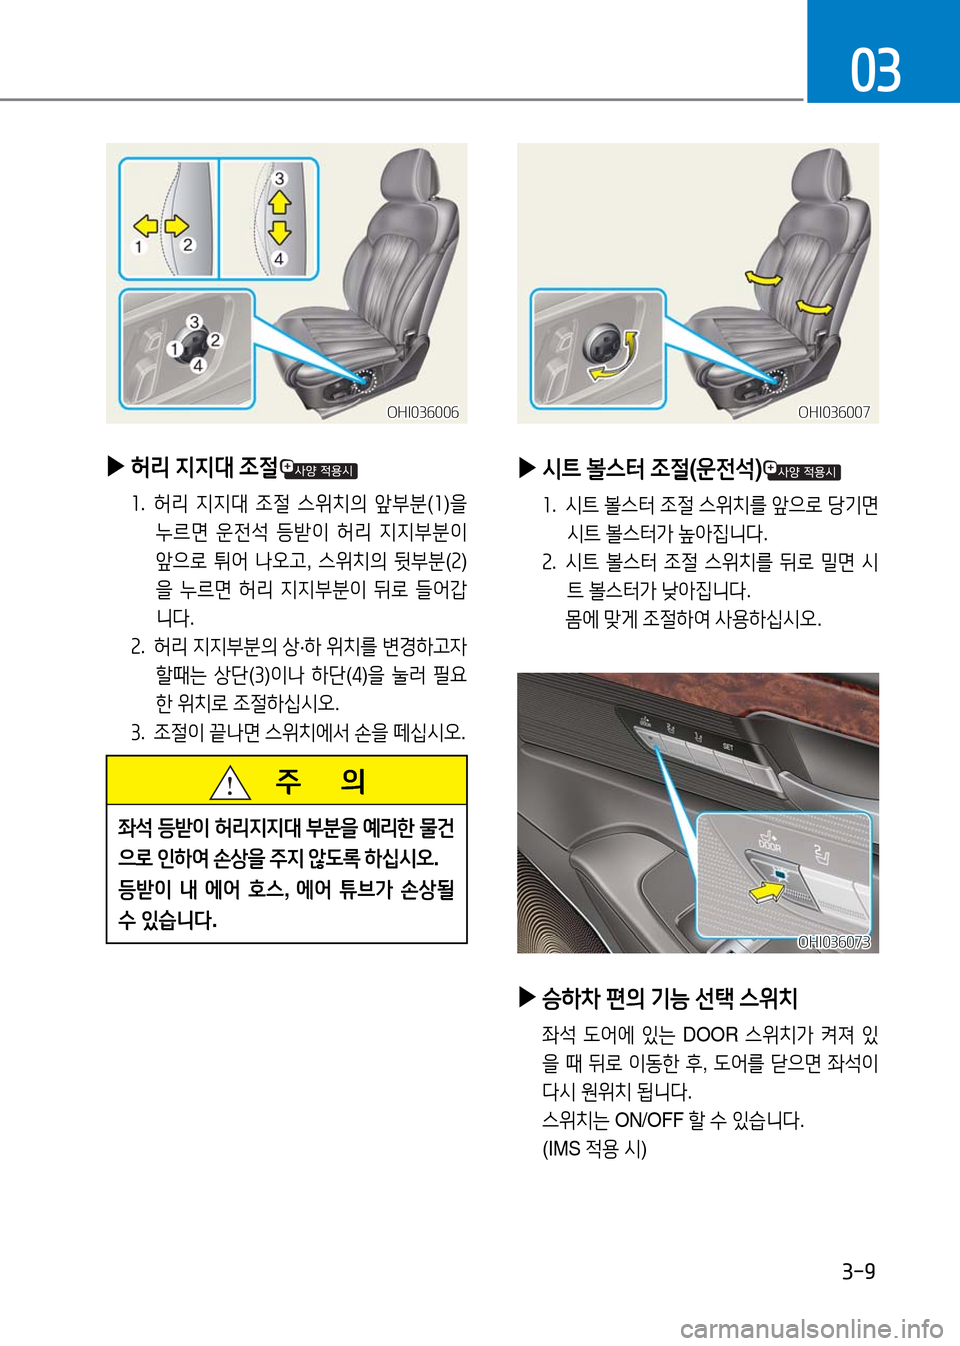 Hyundai Genesis 2016  EQ900 HI - 사용 설명서 (in Korean) 3-9
03
 ▶허리 지지대 조절
1. 허리 지지대 조절 스위치의 앞부분(1)을 
누르면 운전석 등받이 허리 지지부분이 
앞으로 튀어 나오고, 스위치의 뒷부분(2)
